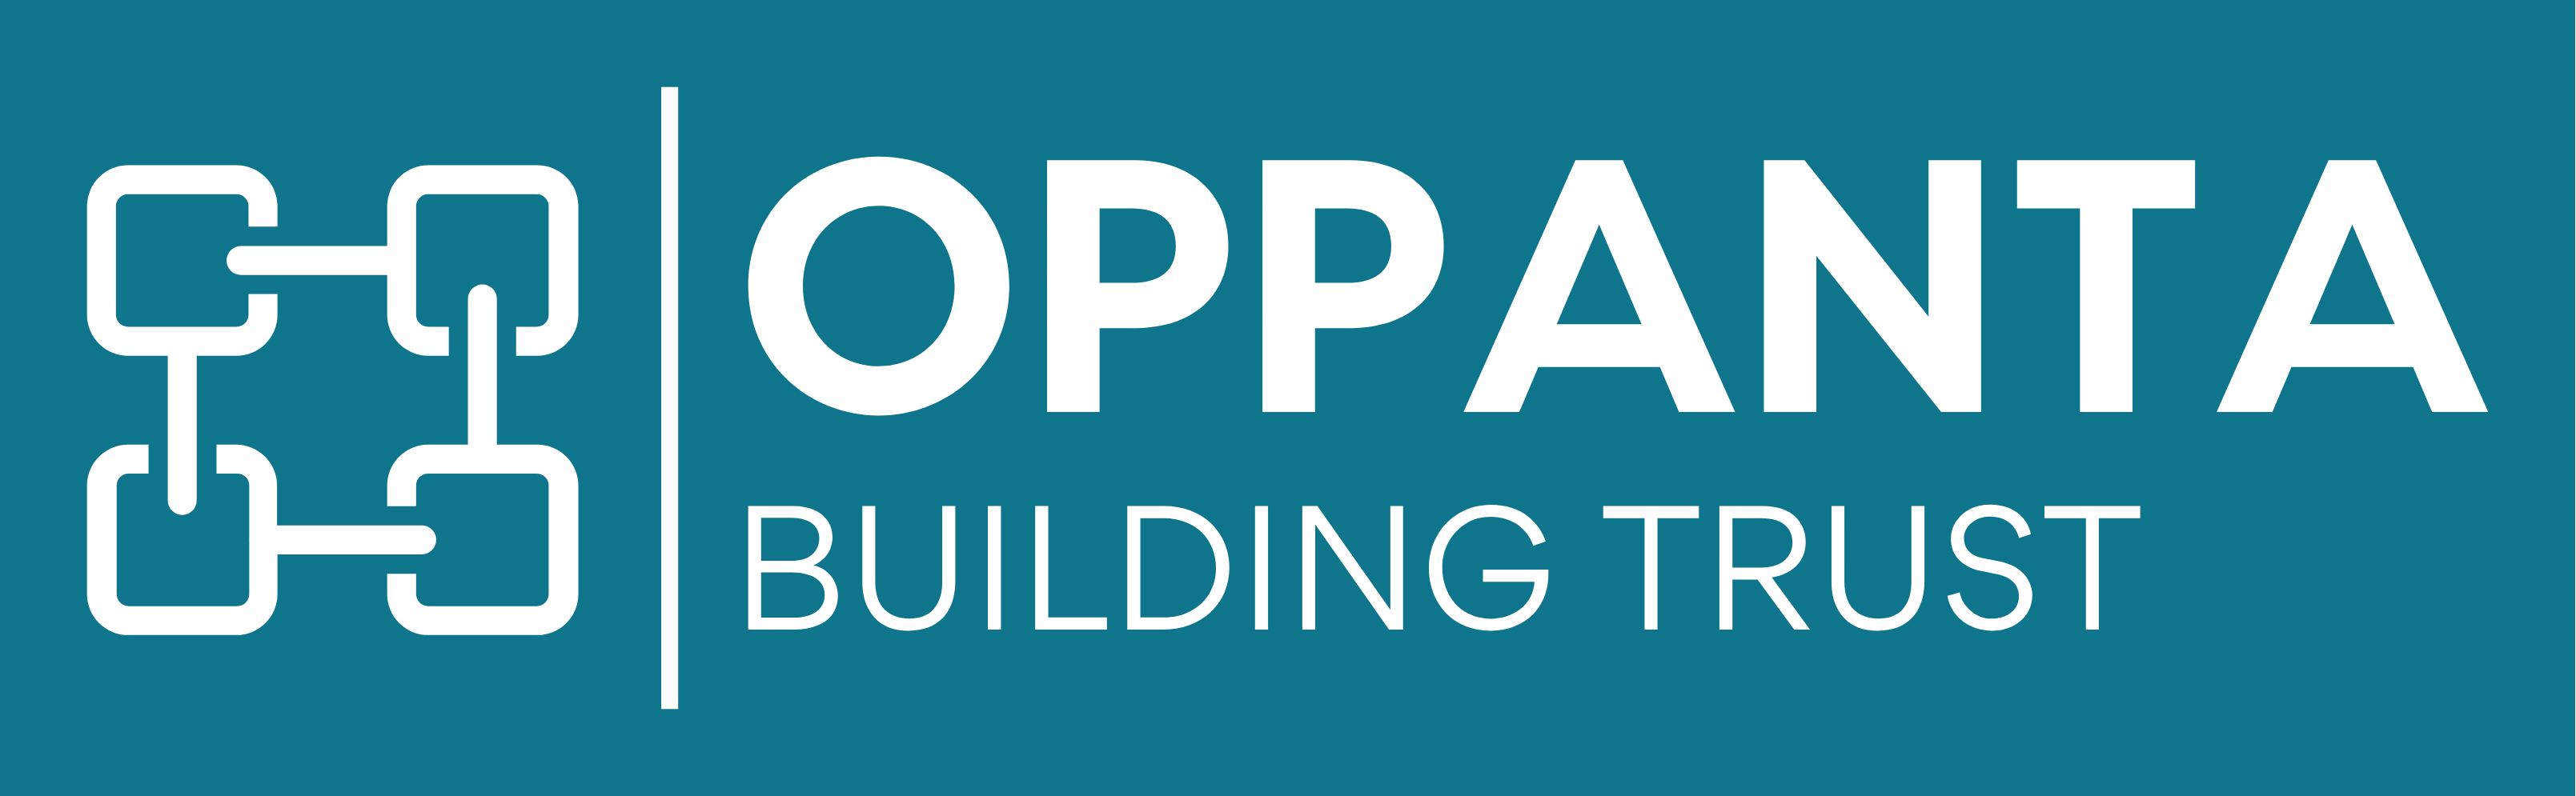 Oppanta - Building Trust